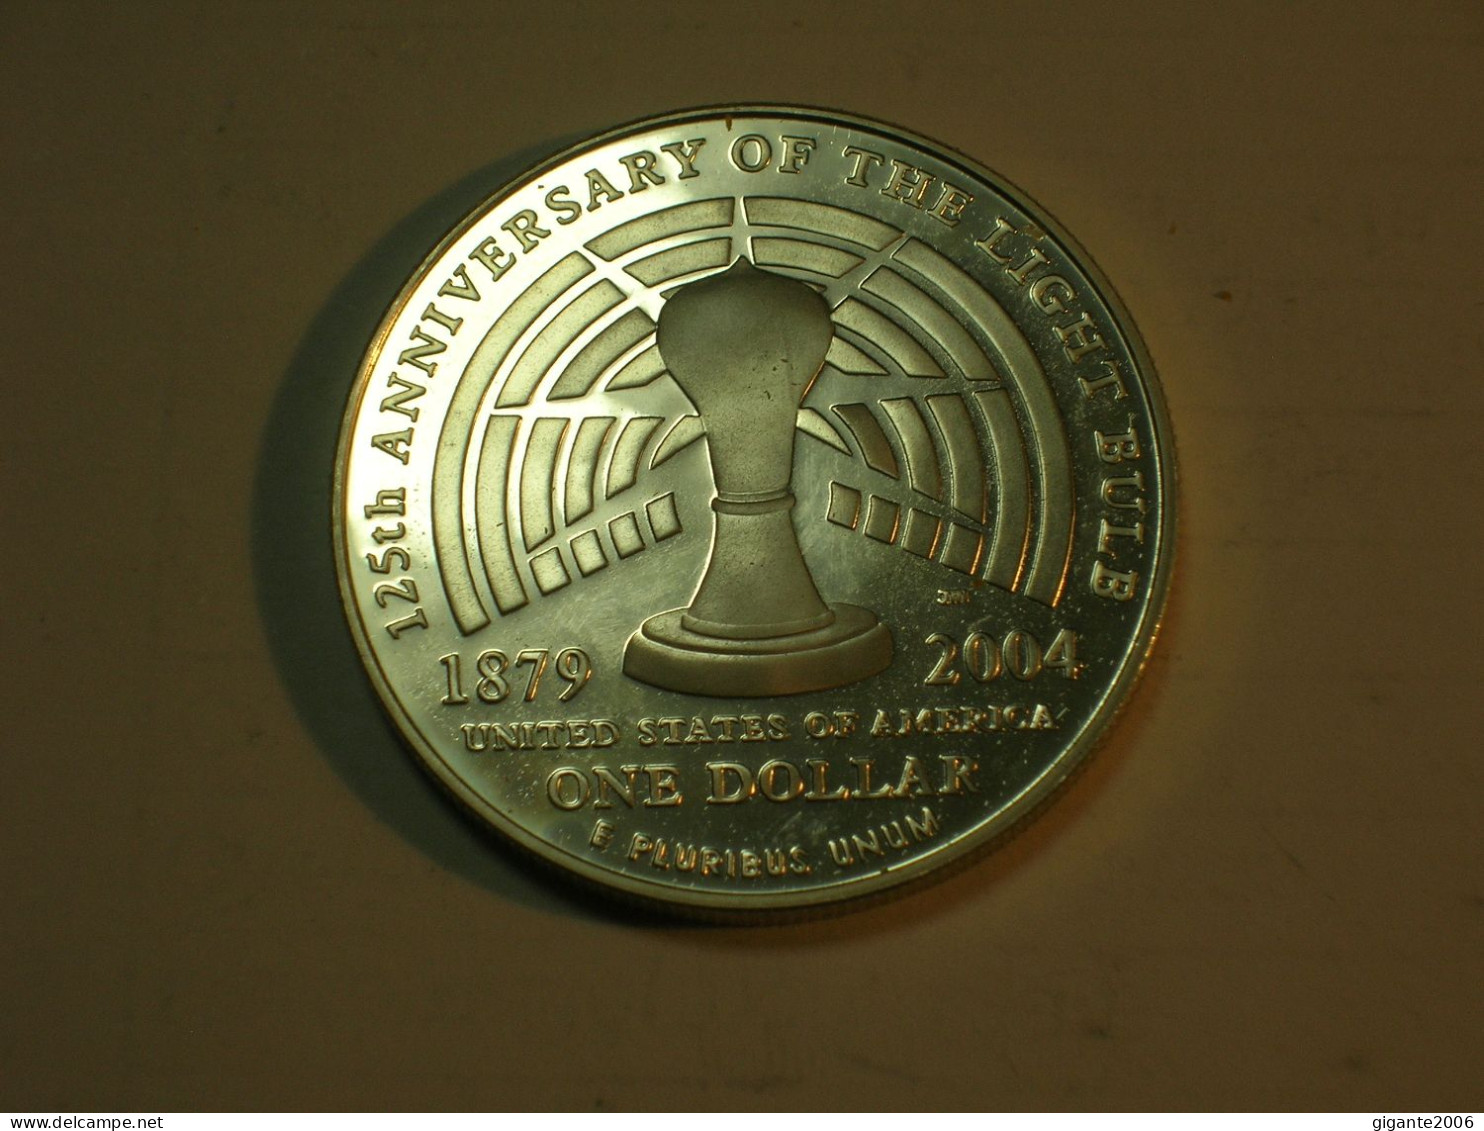 Estados Unidos/USA 1 Dolar Conmemorativo, 2004 P, Proof, Edison (13962) - Gedenkmünzen